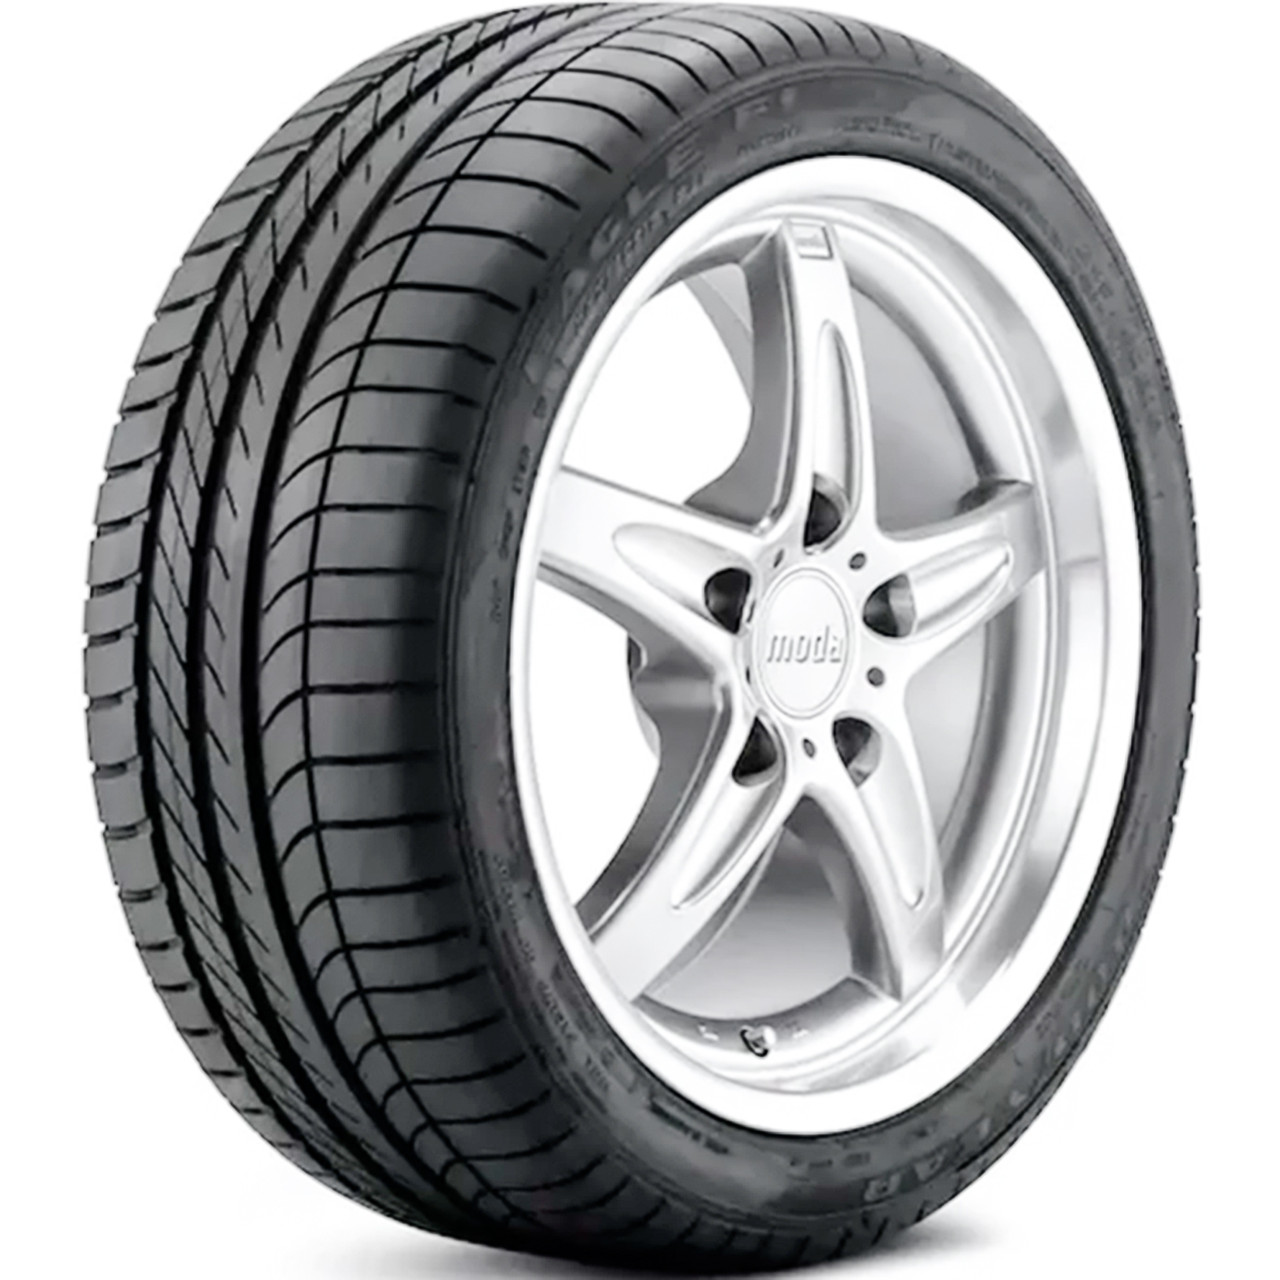 Photos - Tyre Goodyear Eagle F1 Asymmetric 235/50R17, Summer, High Performance tires. 